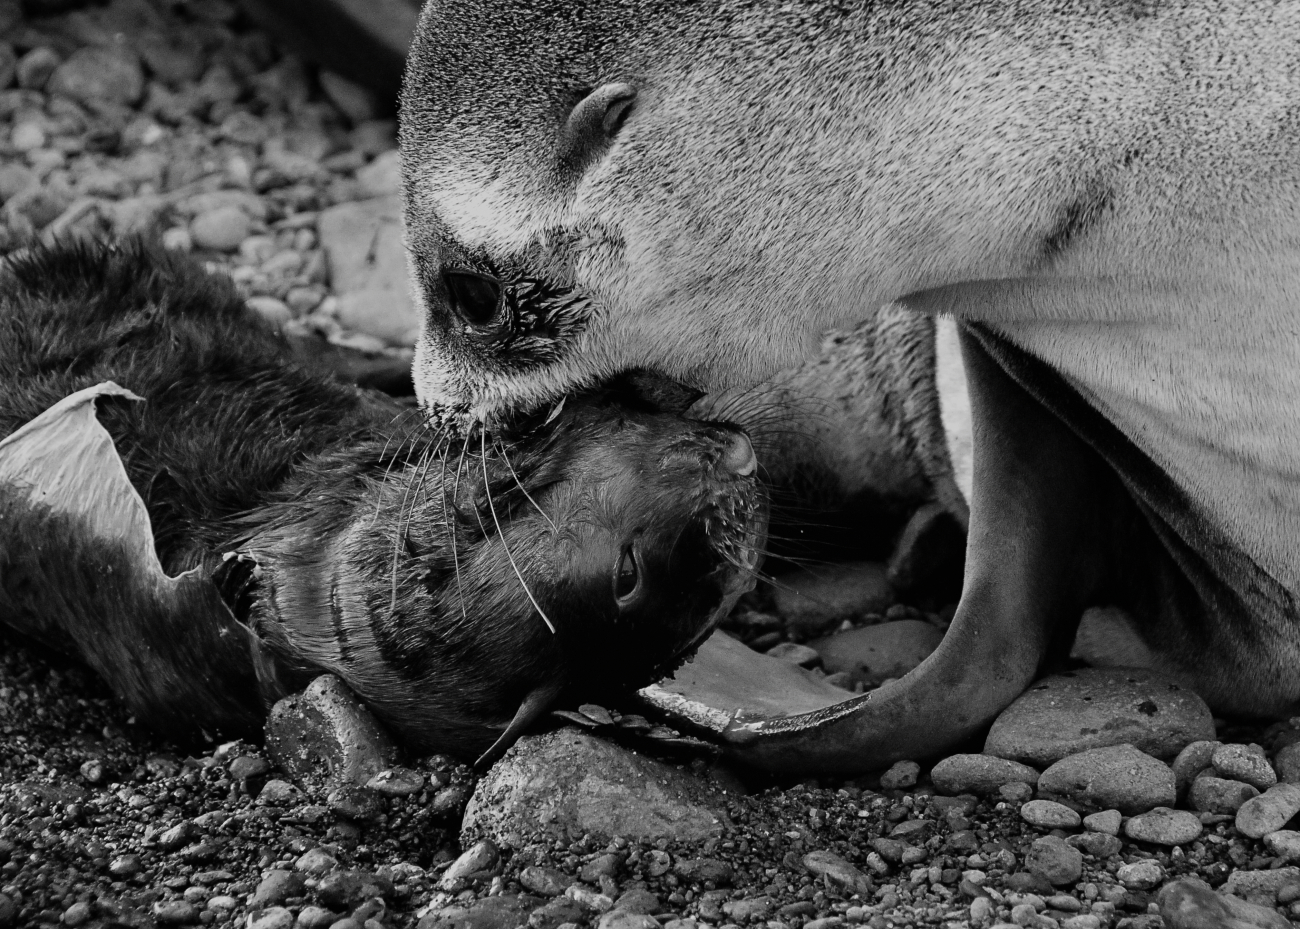 An Antarctic fur seal mother cleans her newborn pup